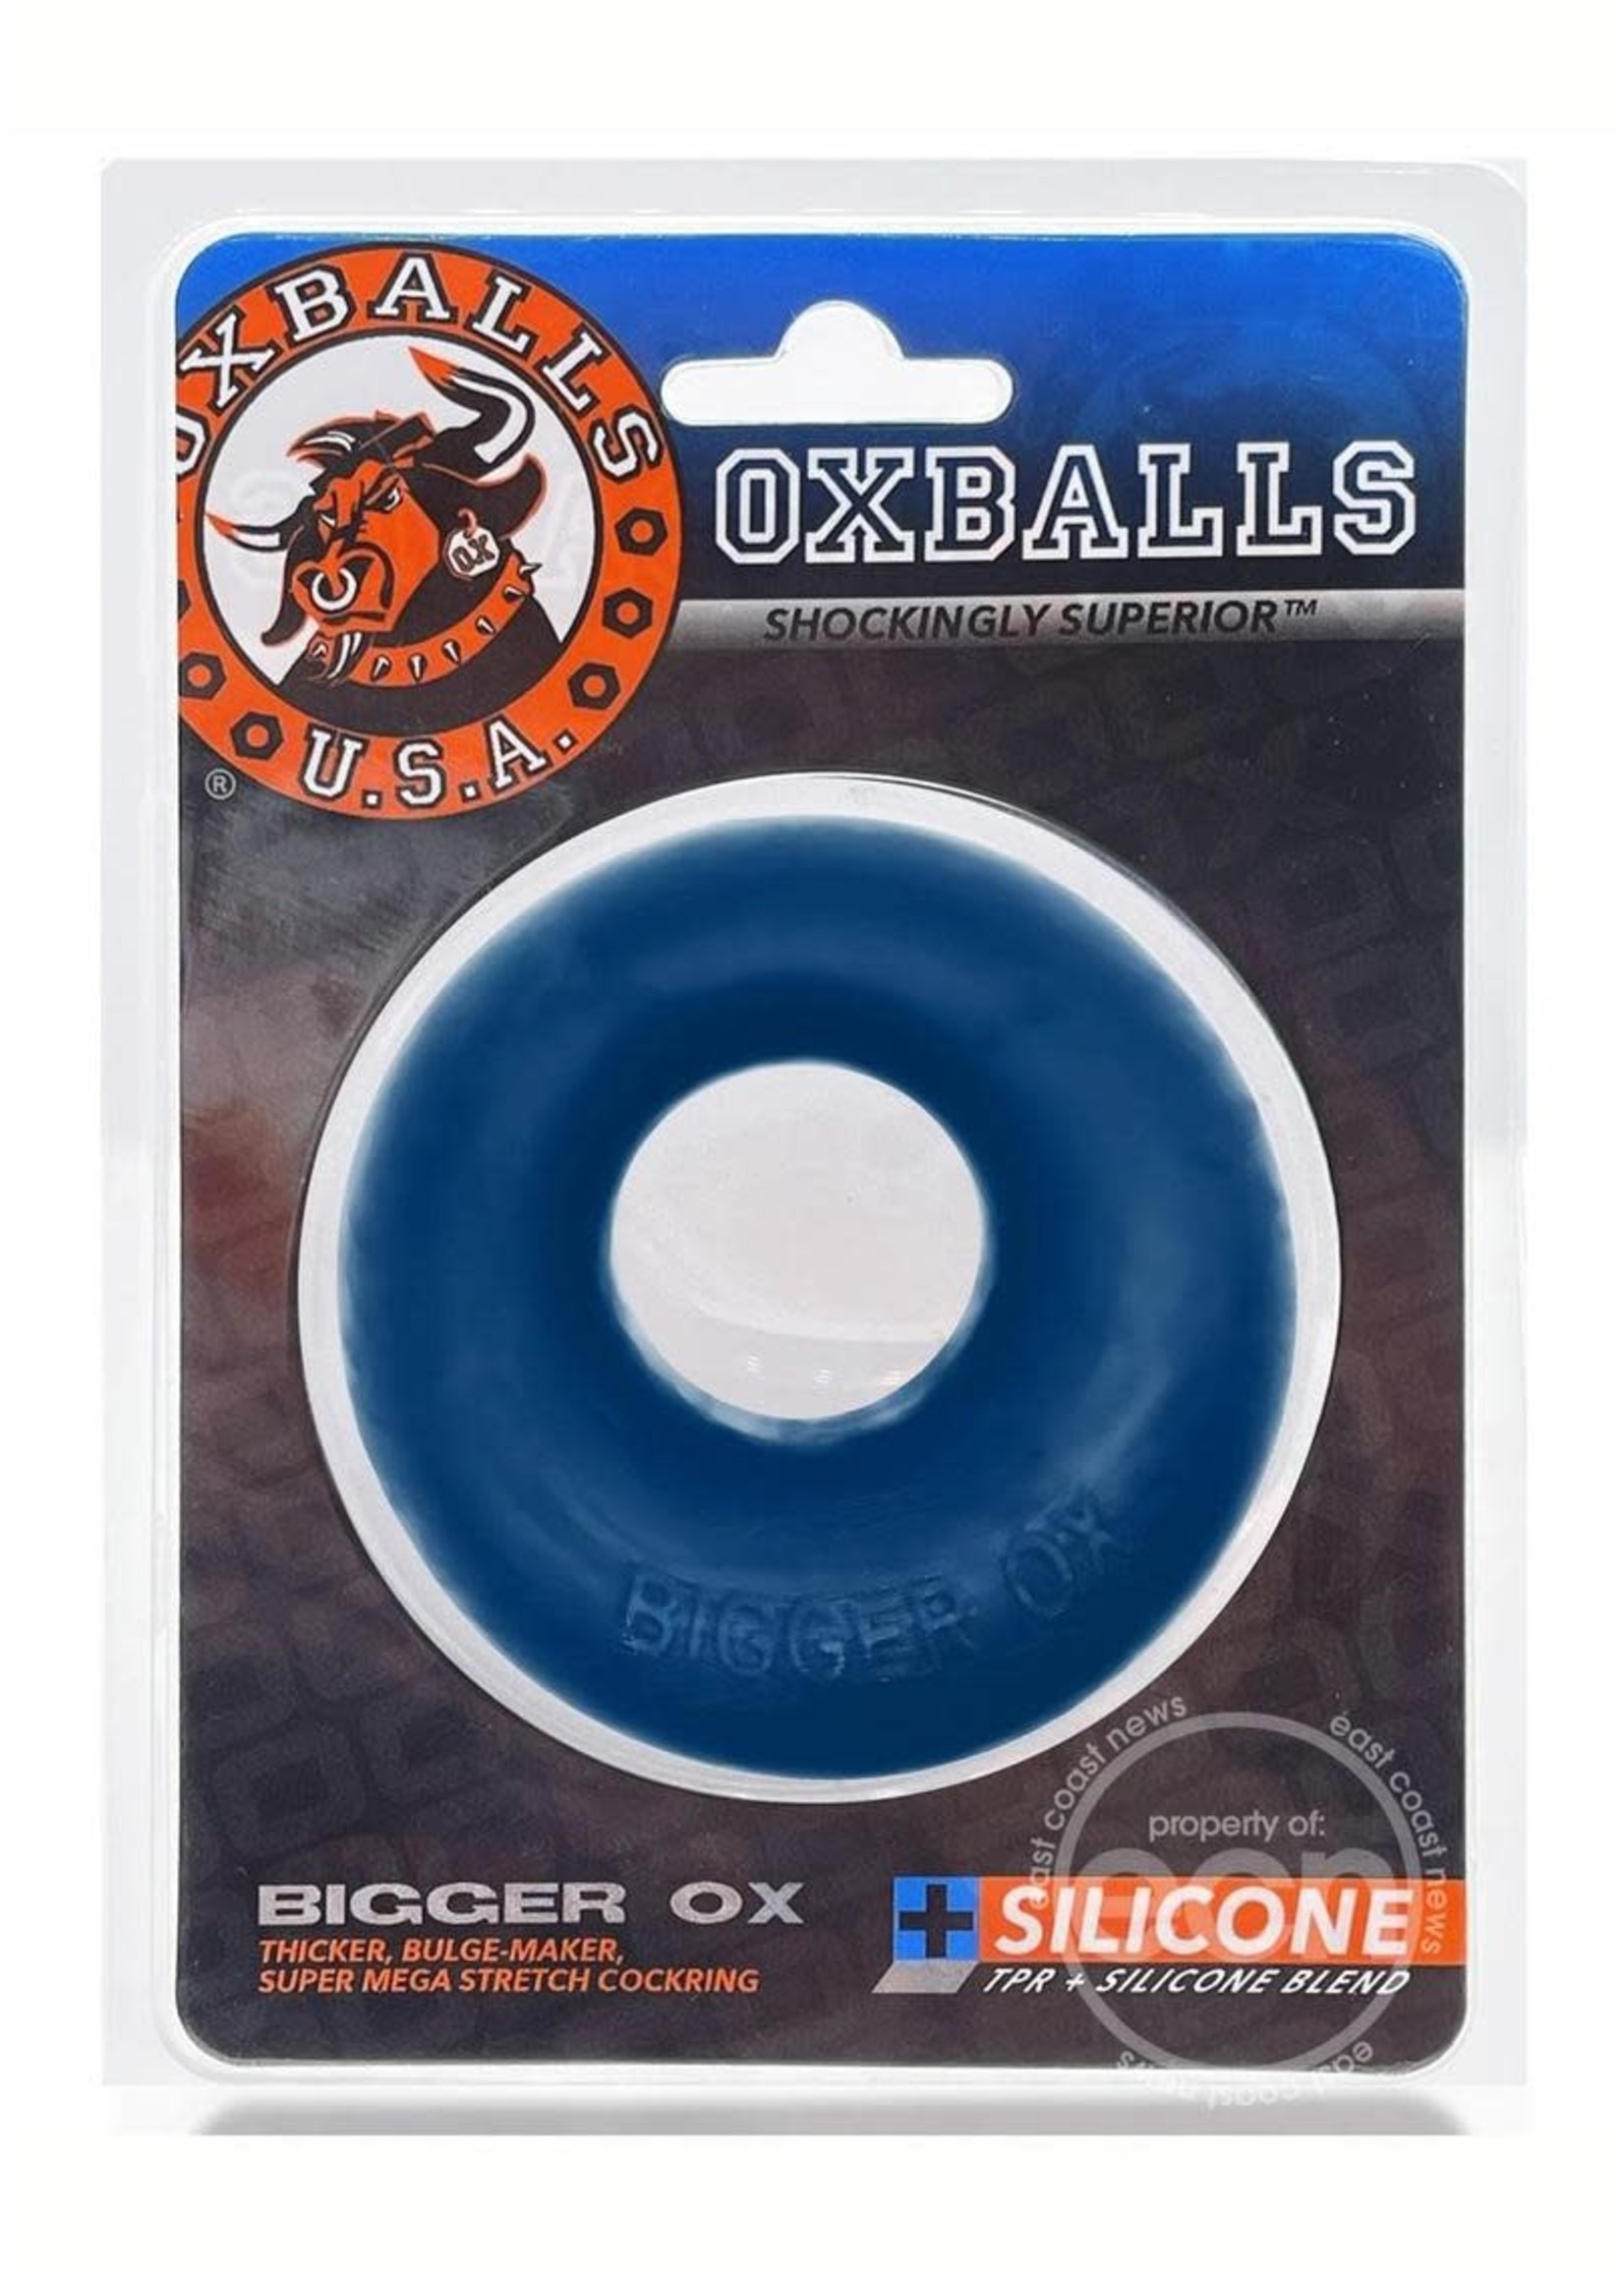 Oxballs Oxballs Bigger Ox